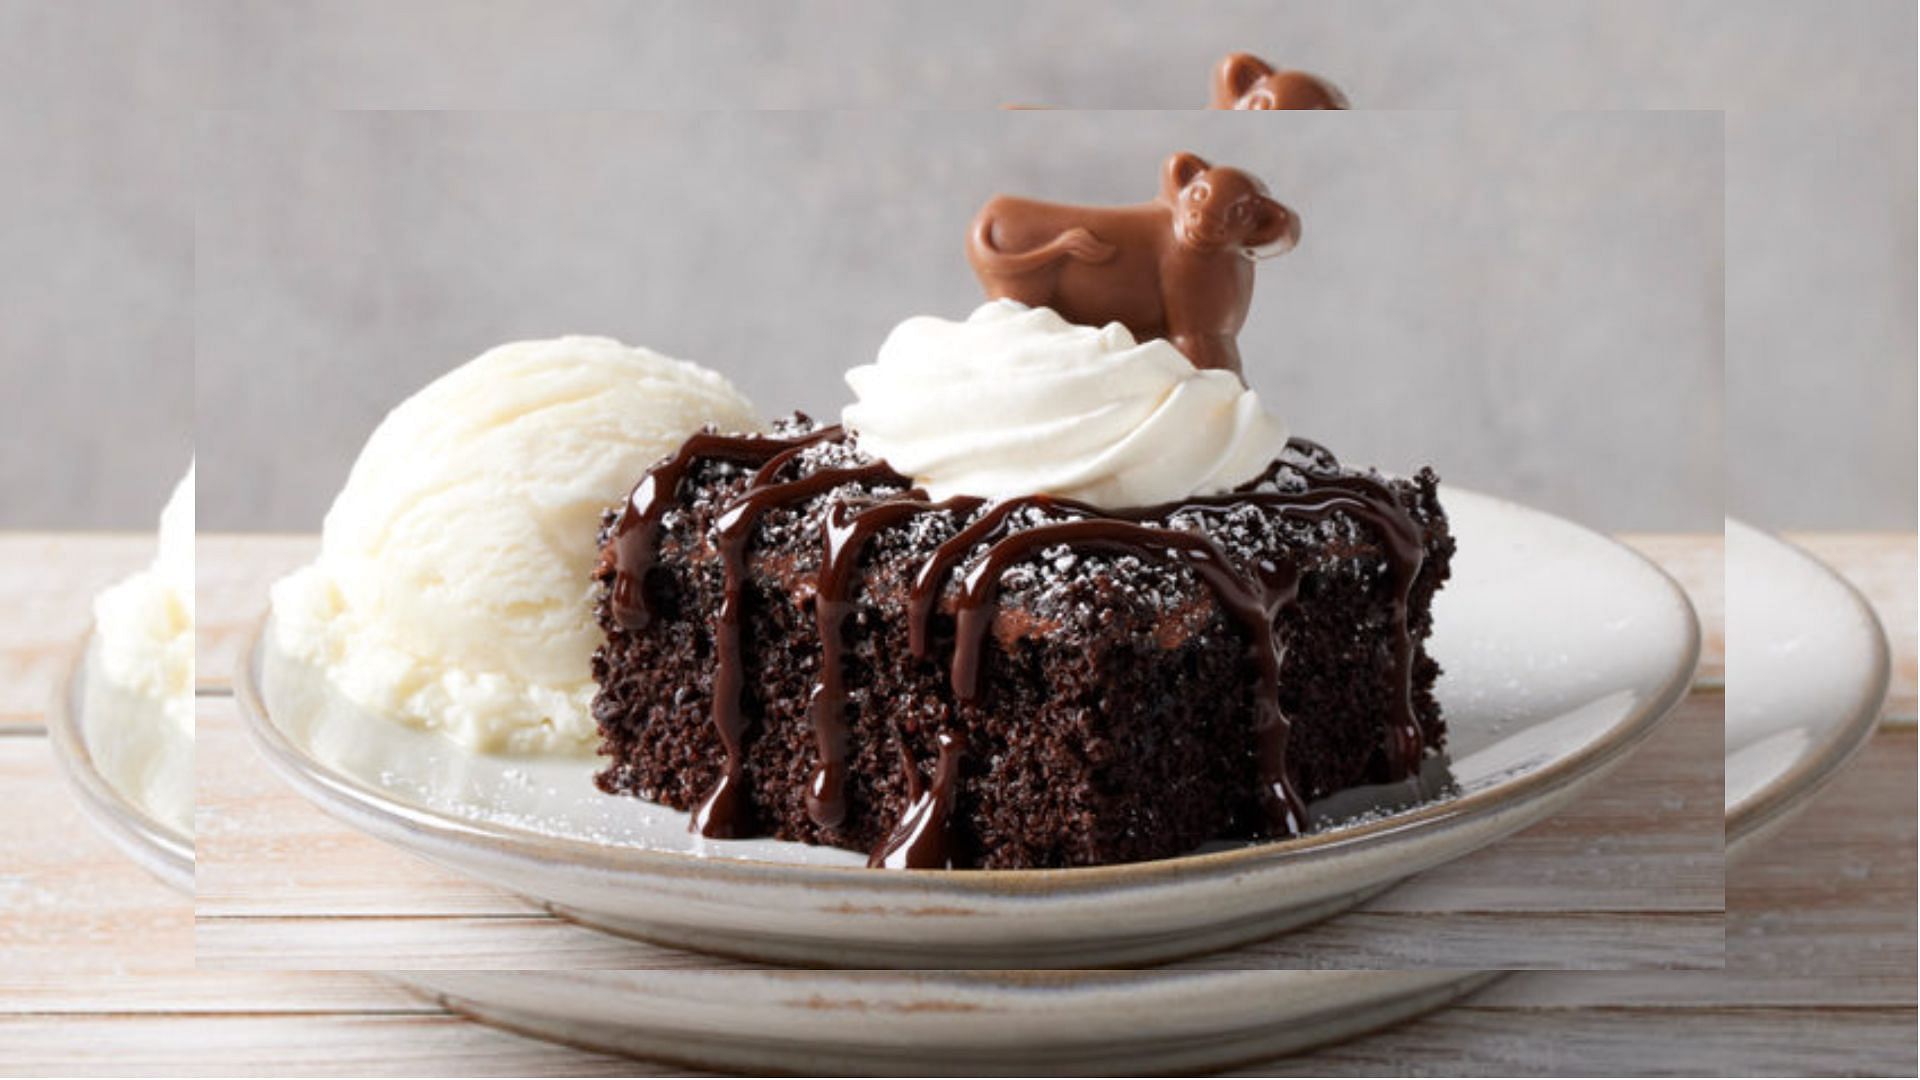 promotional image for Bob Evans&rsquo; Holy Cow Chocolate Cake (Image via Bob Evans)